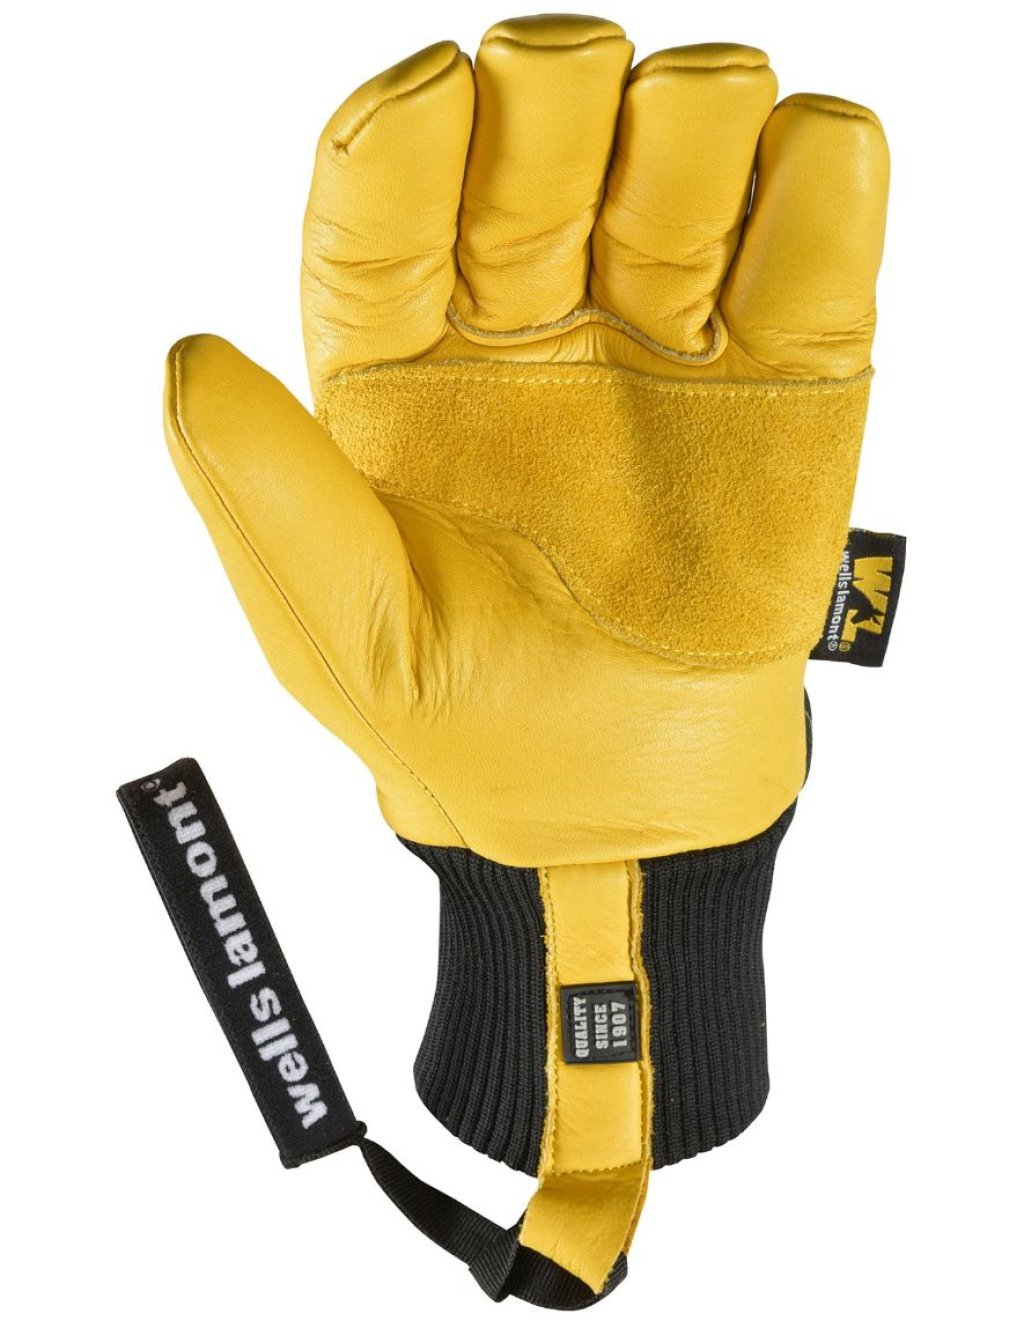 Wells Lamont x Faction Gloves